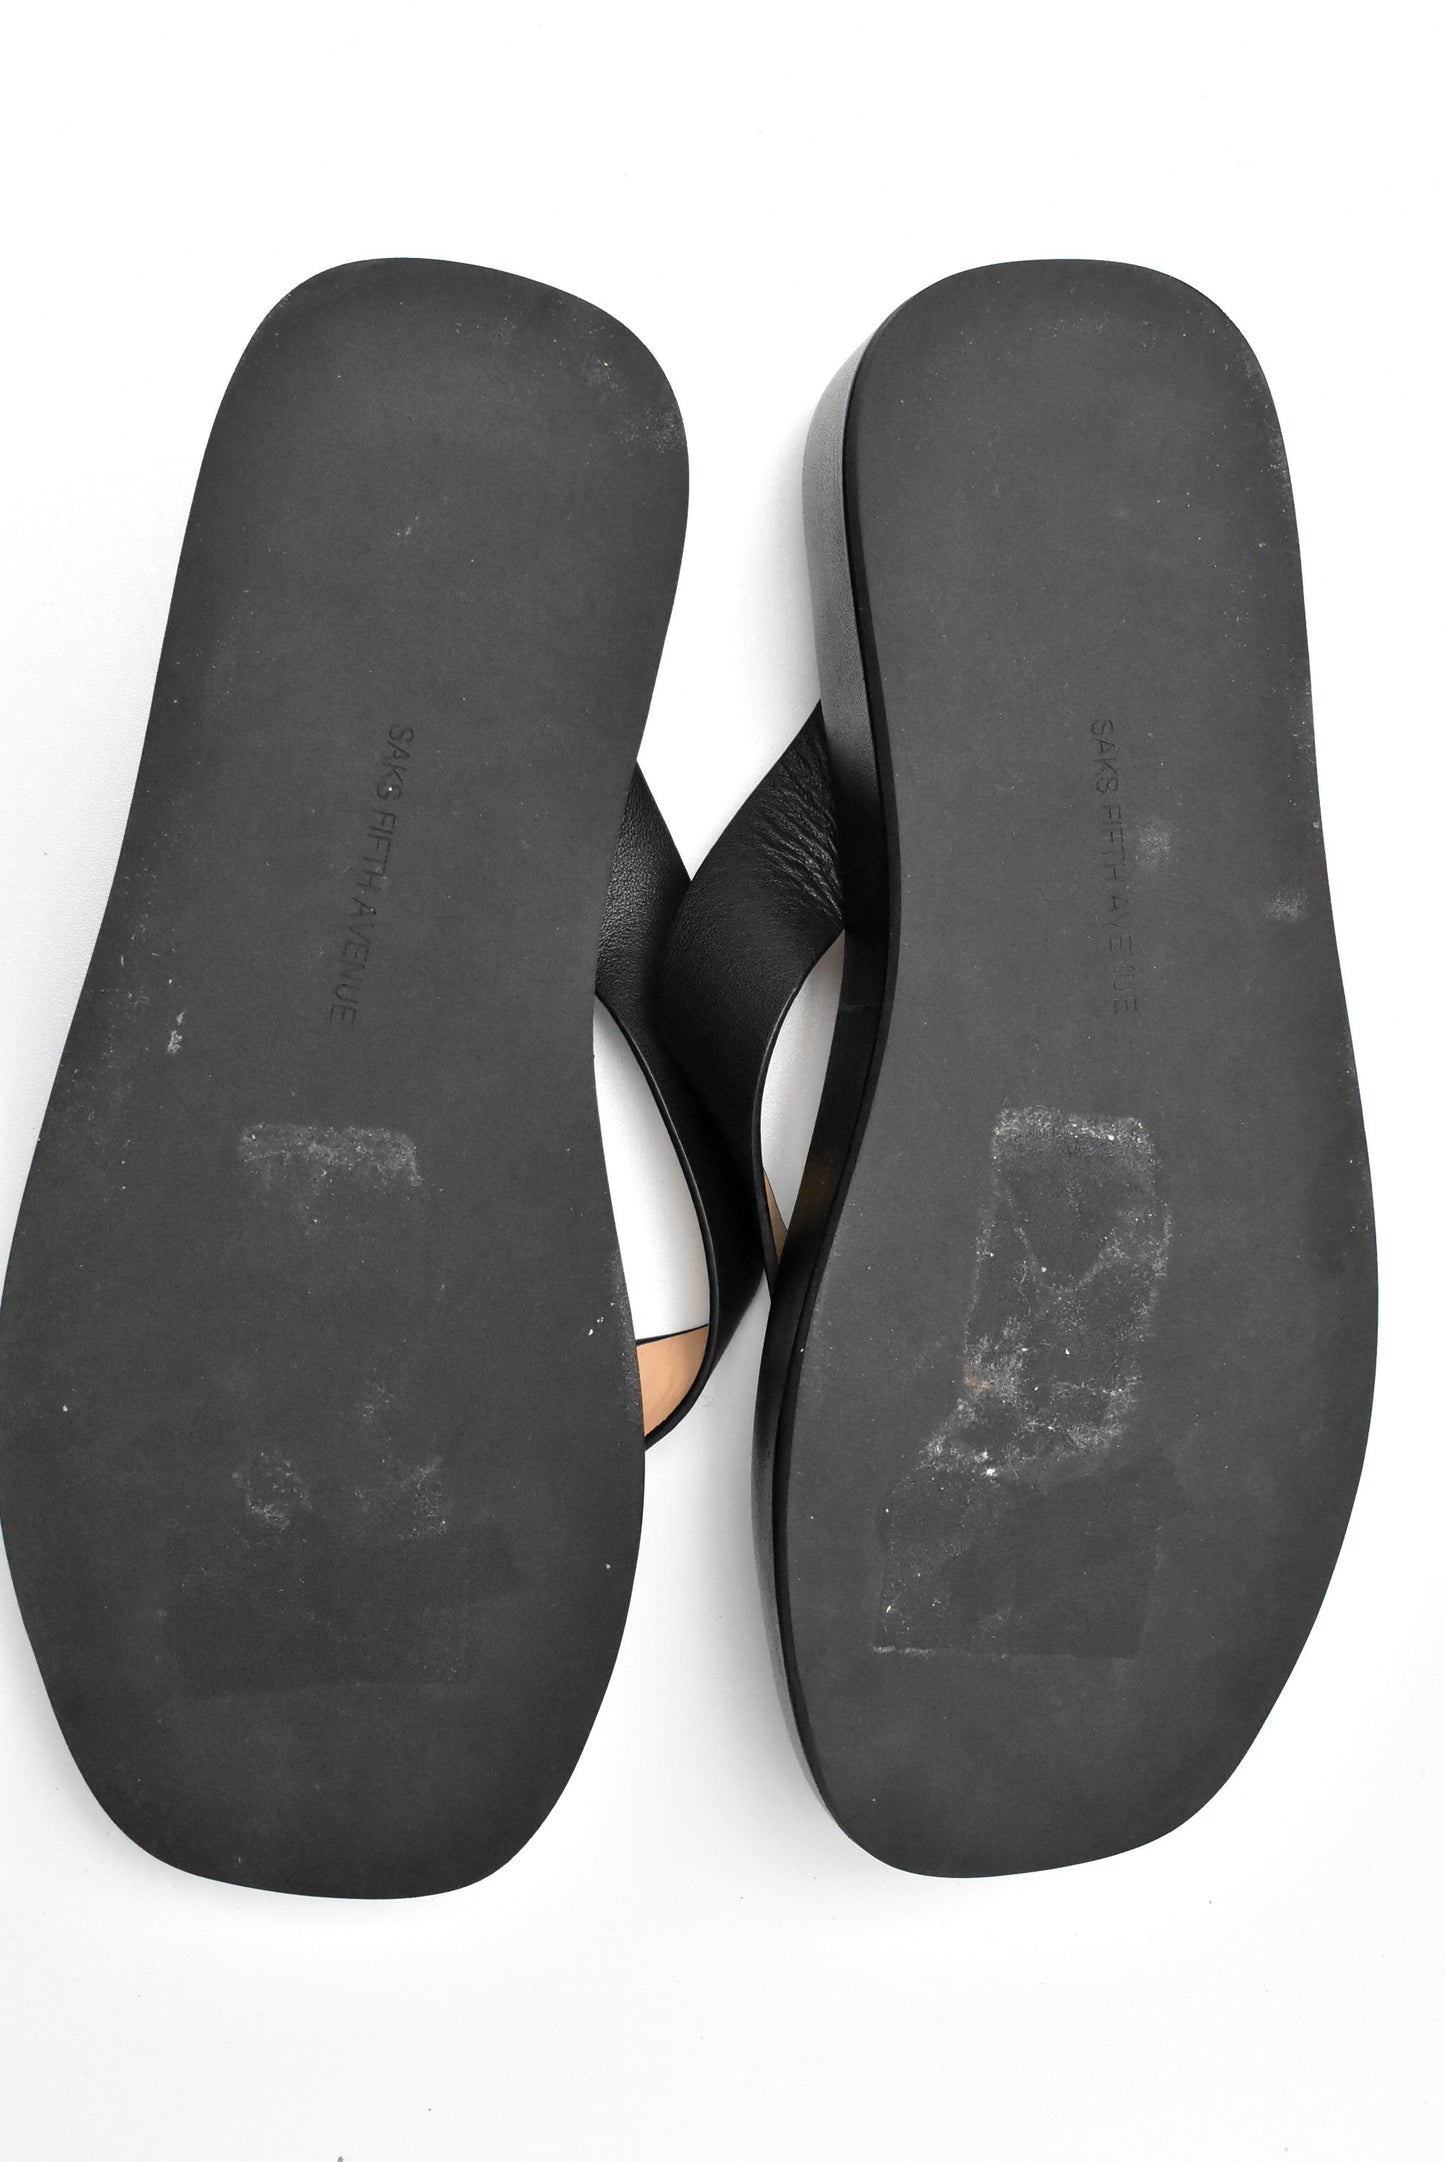 Saks Fifth Avenue black sandals, 11